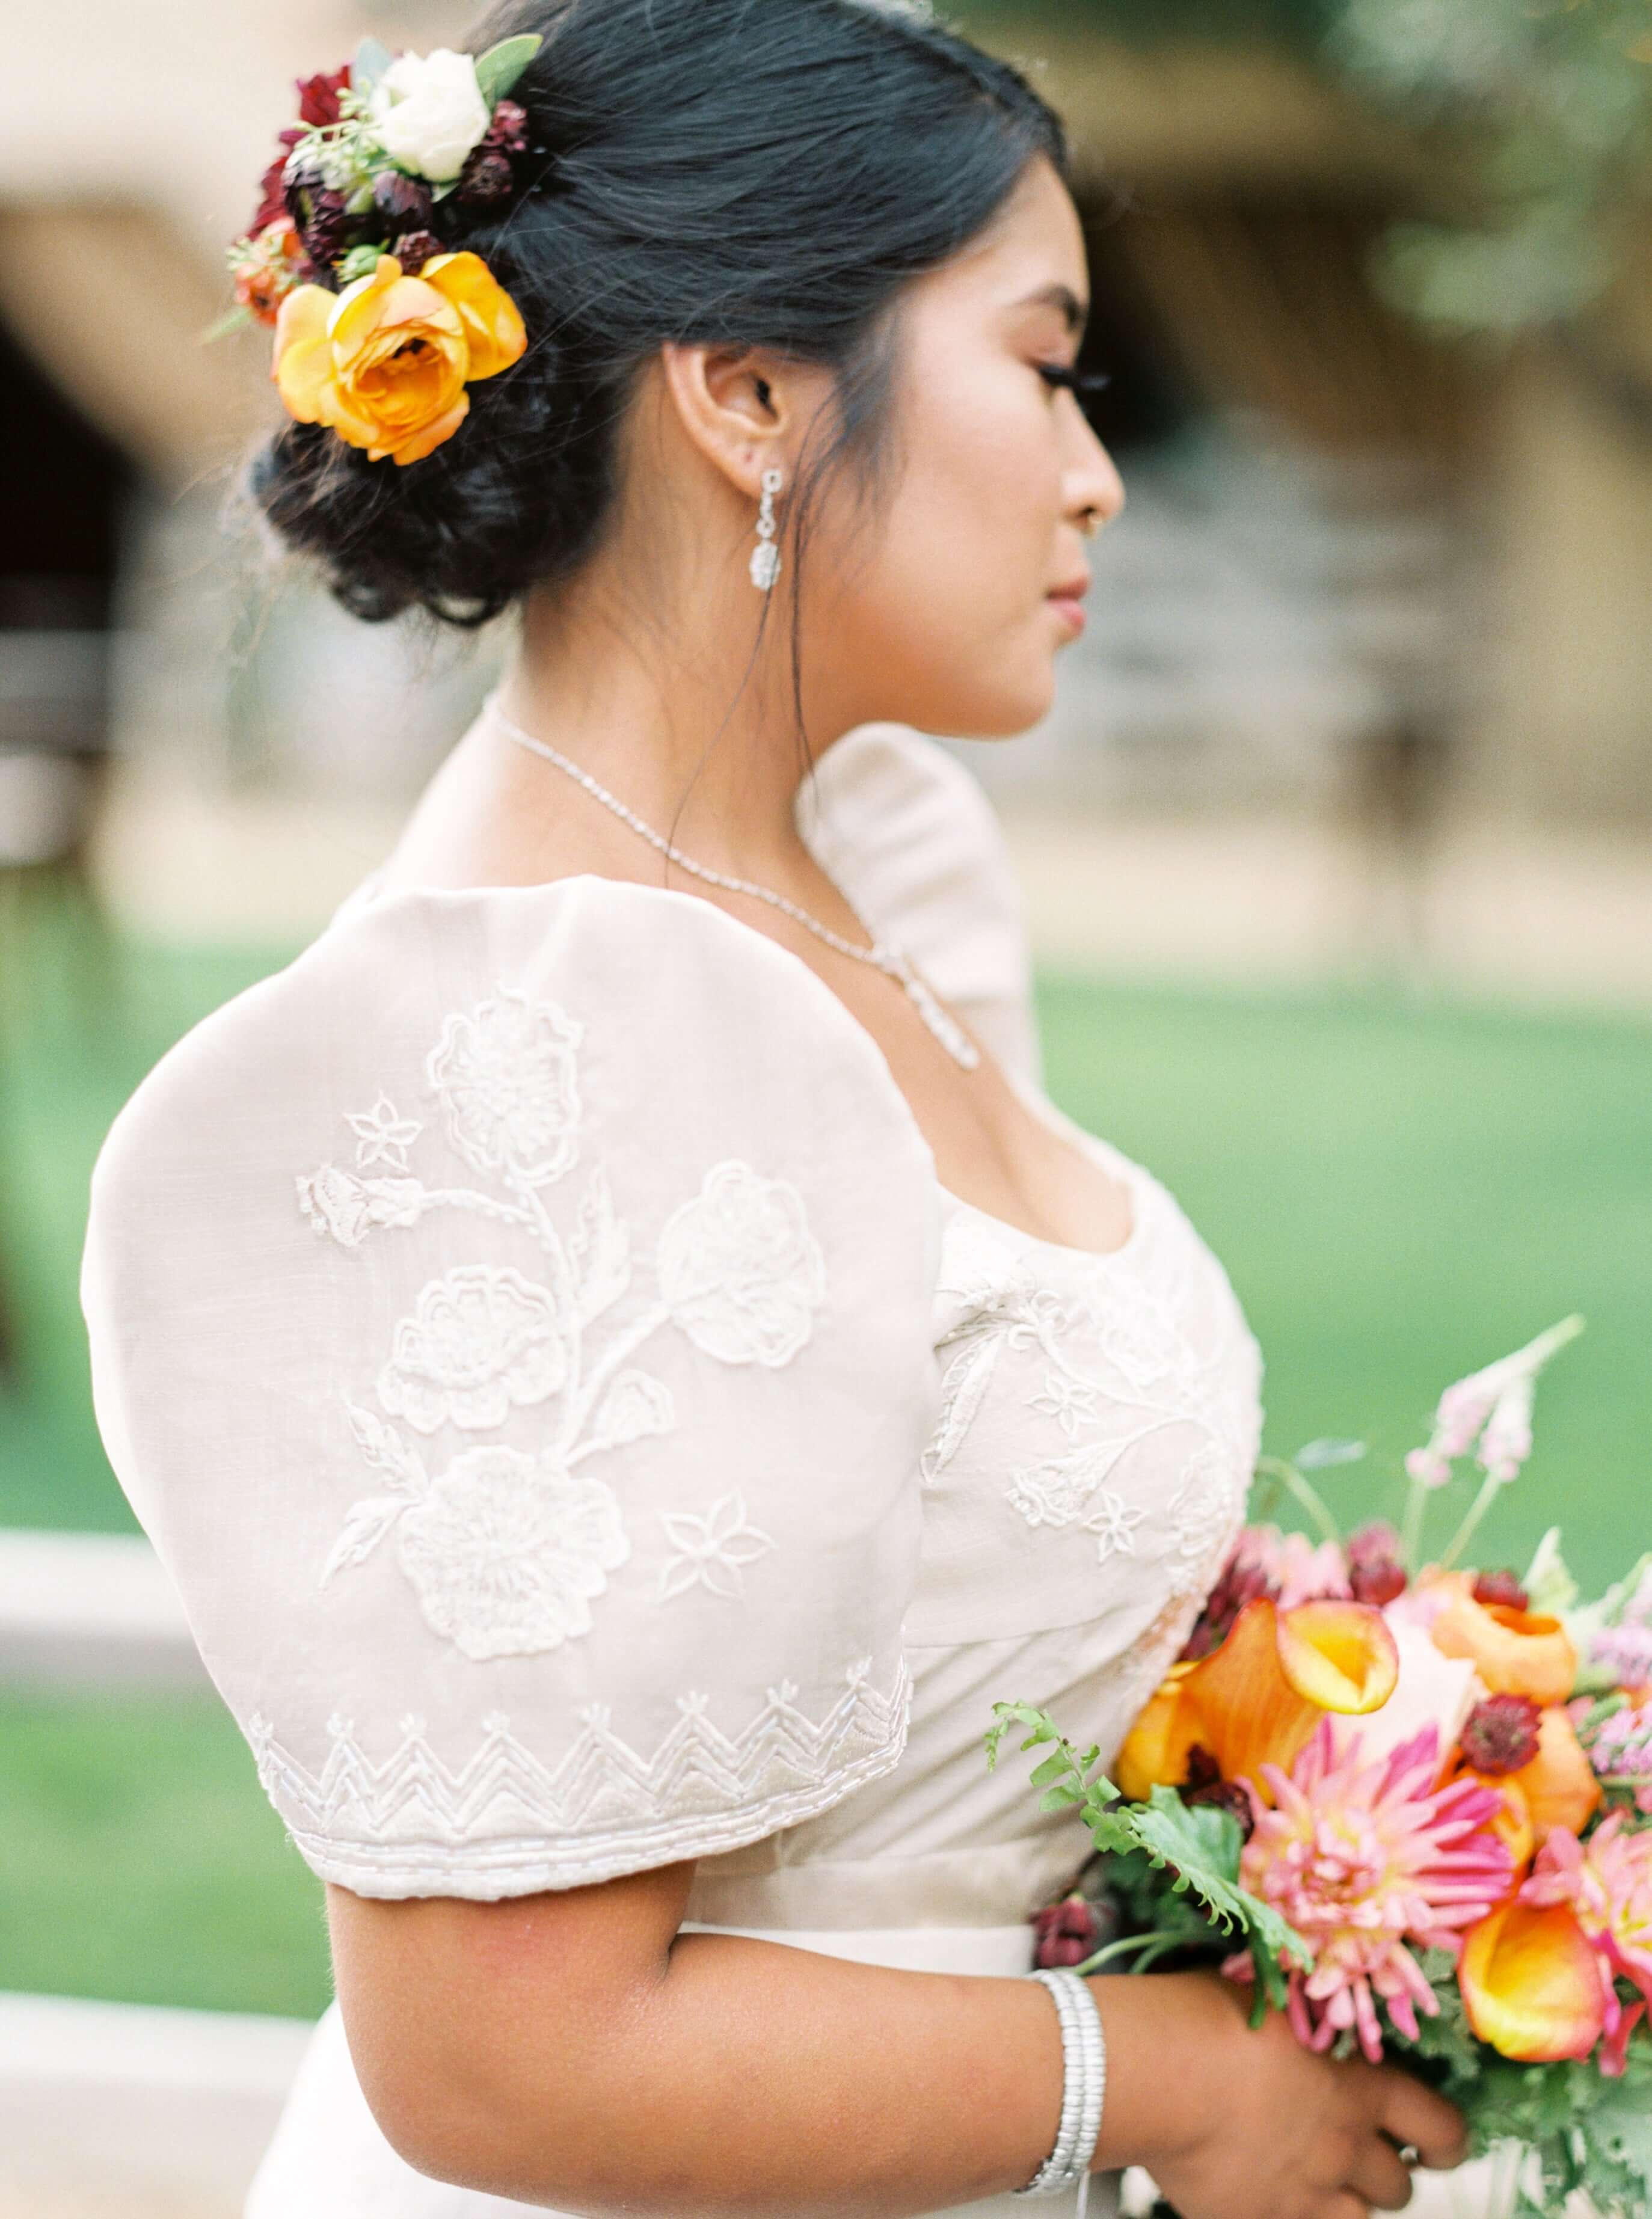 VINTA couture Filipiniana wedding terno dress